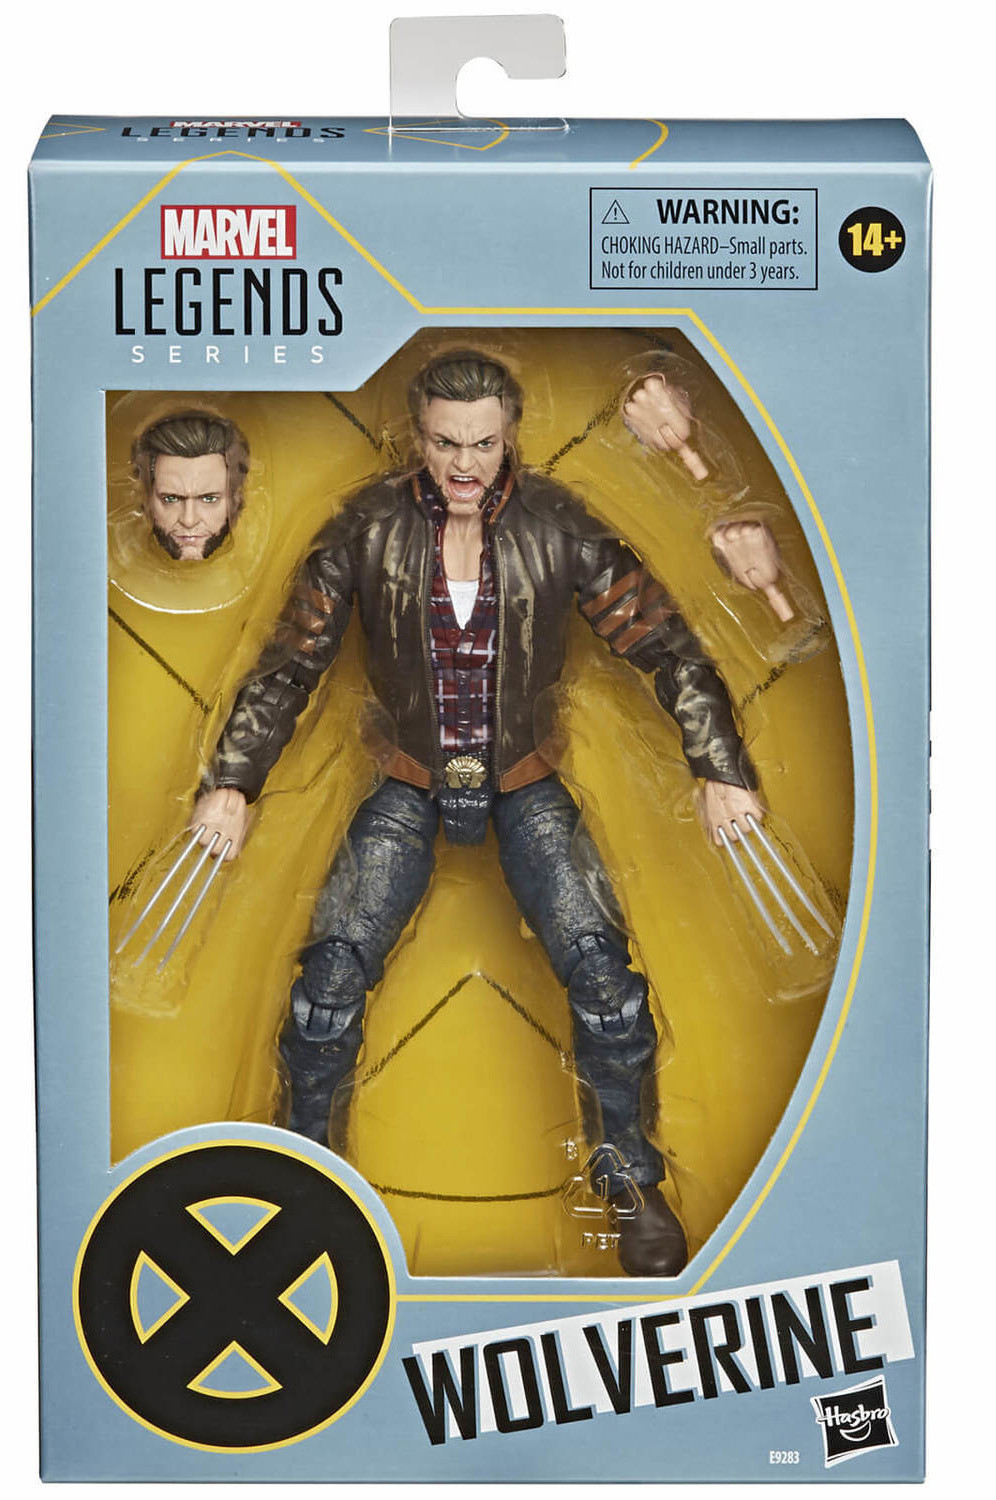  Marvel Legends Series: Wolverine Action Figure (15 )